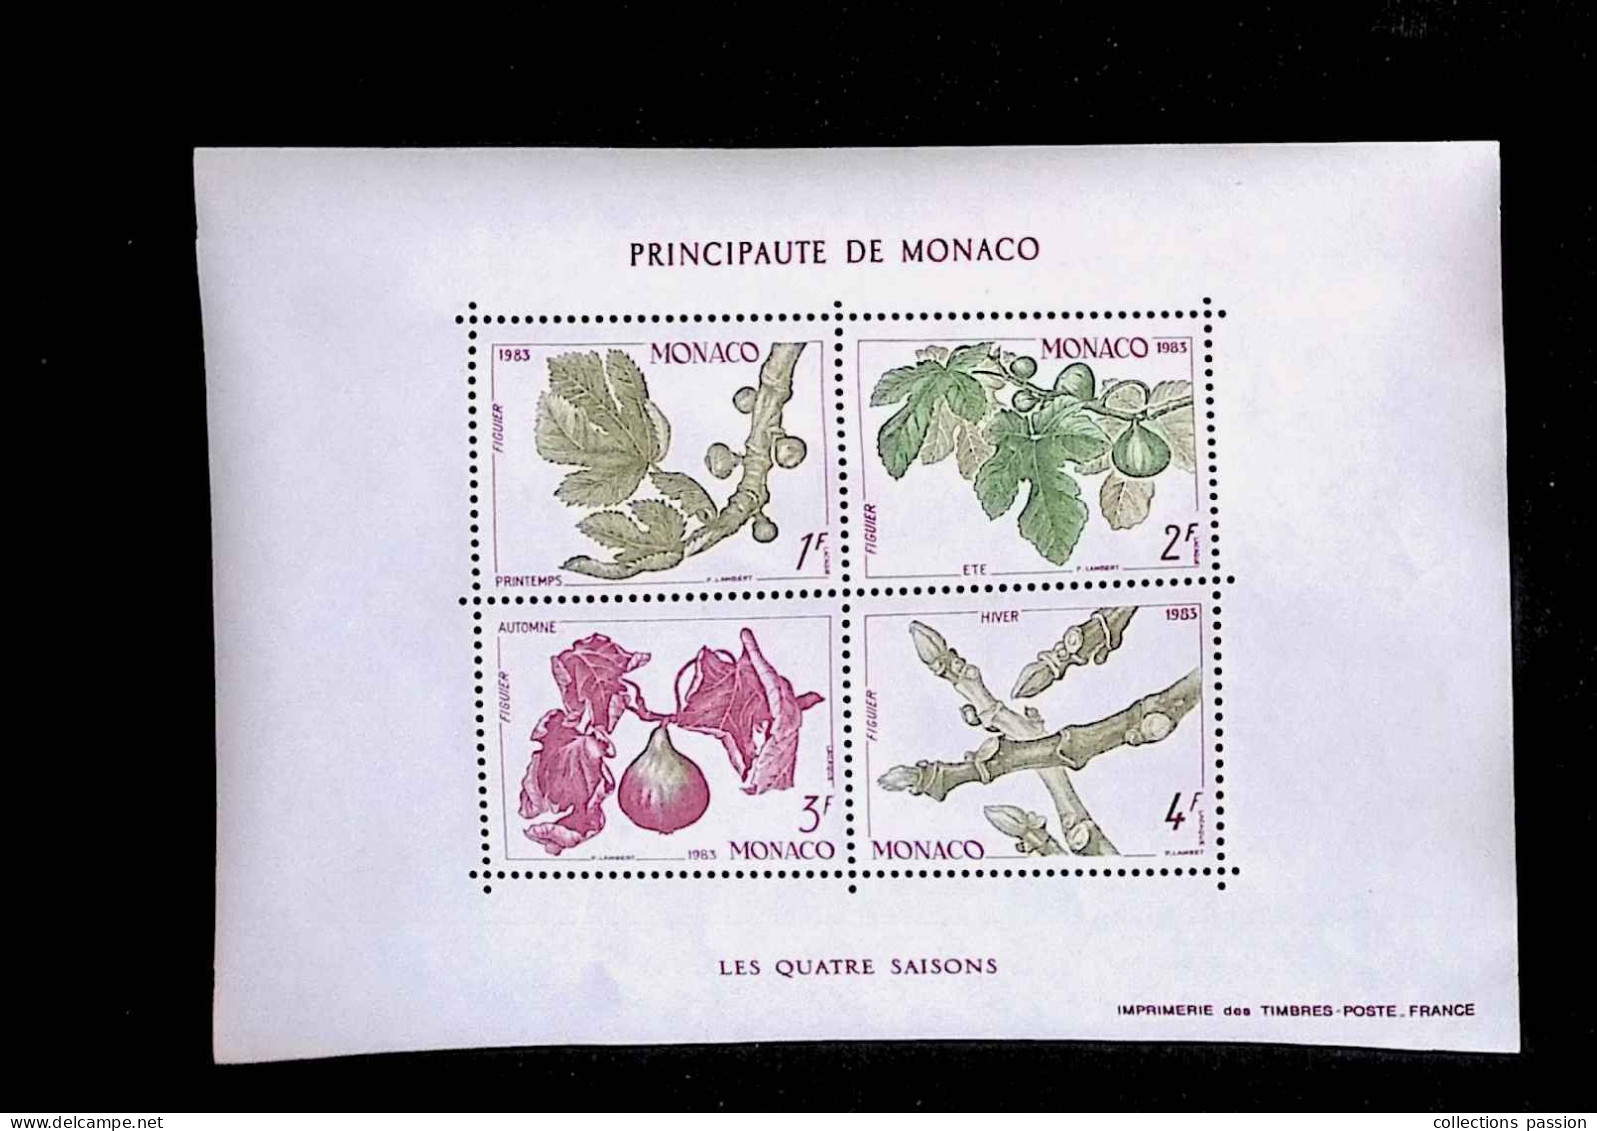 CL, Bloc De 4 Timbres, 1393-96, BF 26, Block, Principauté De Monaco, 1983, LES QUATRE SAISONS - Blocks & Sheetlets